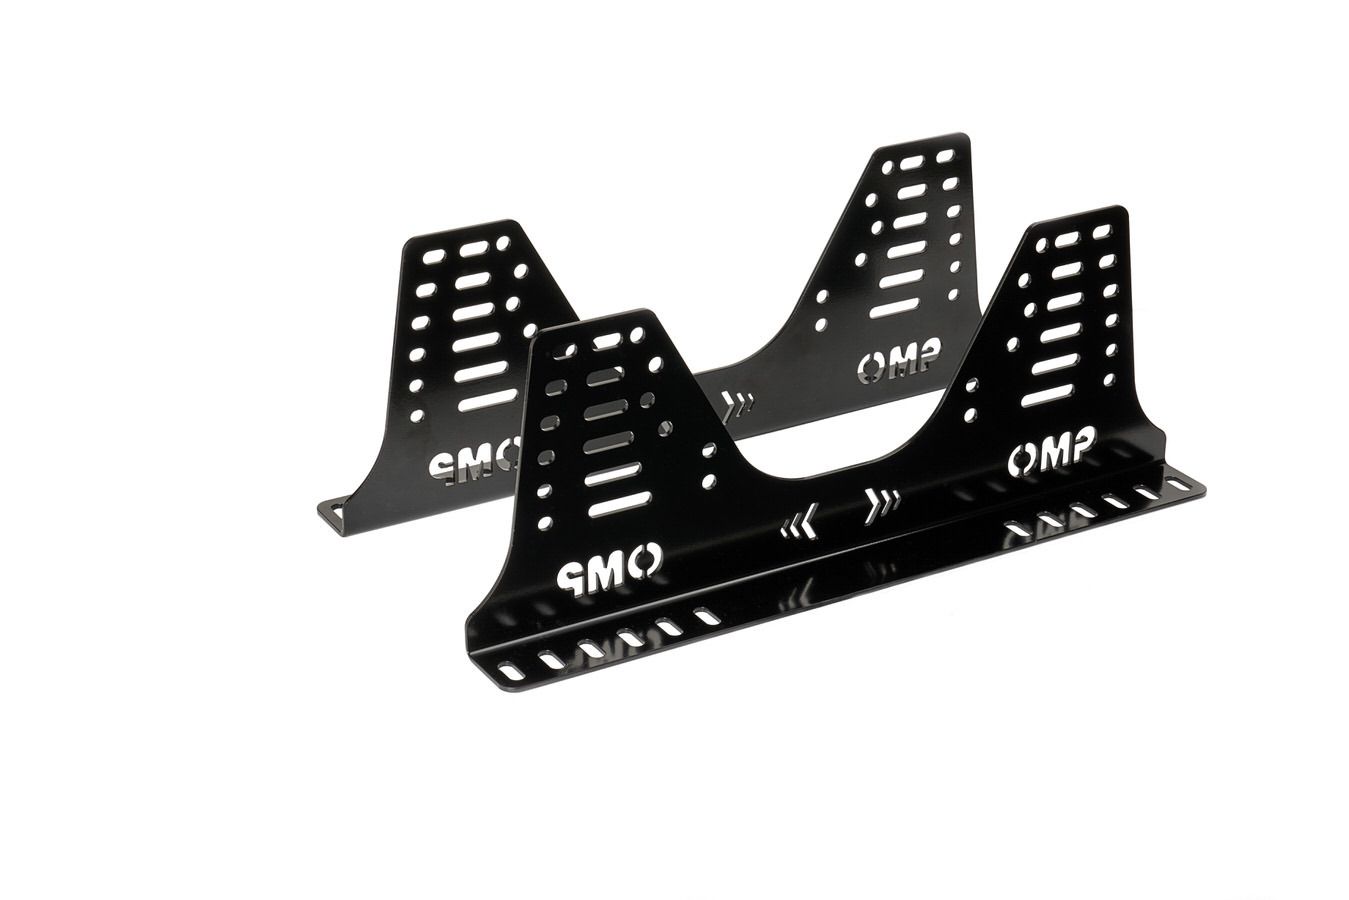 OMP Racing Inc HB/692/N OMP Racing Lumbar Support Seat Cushions